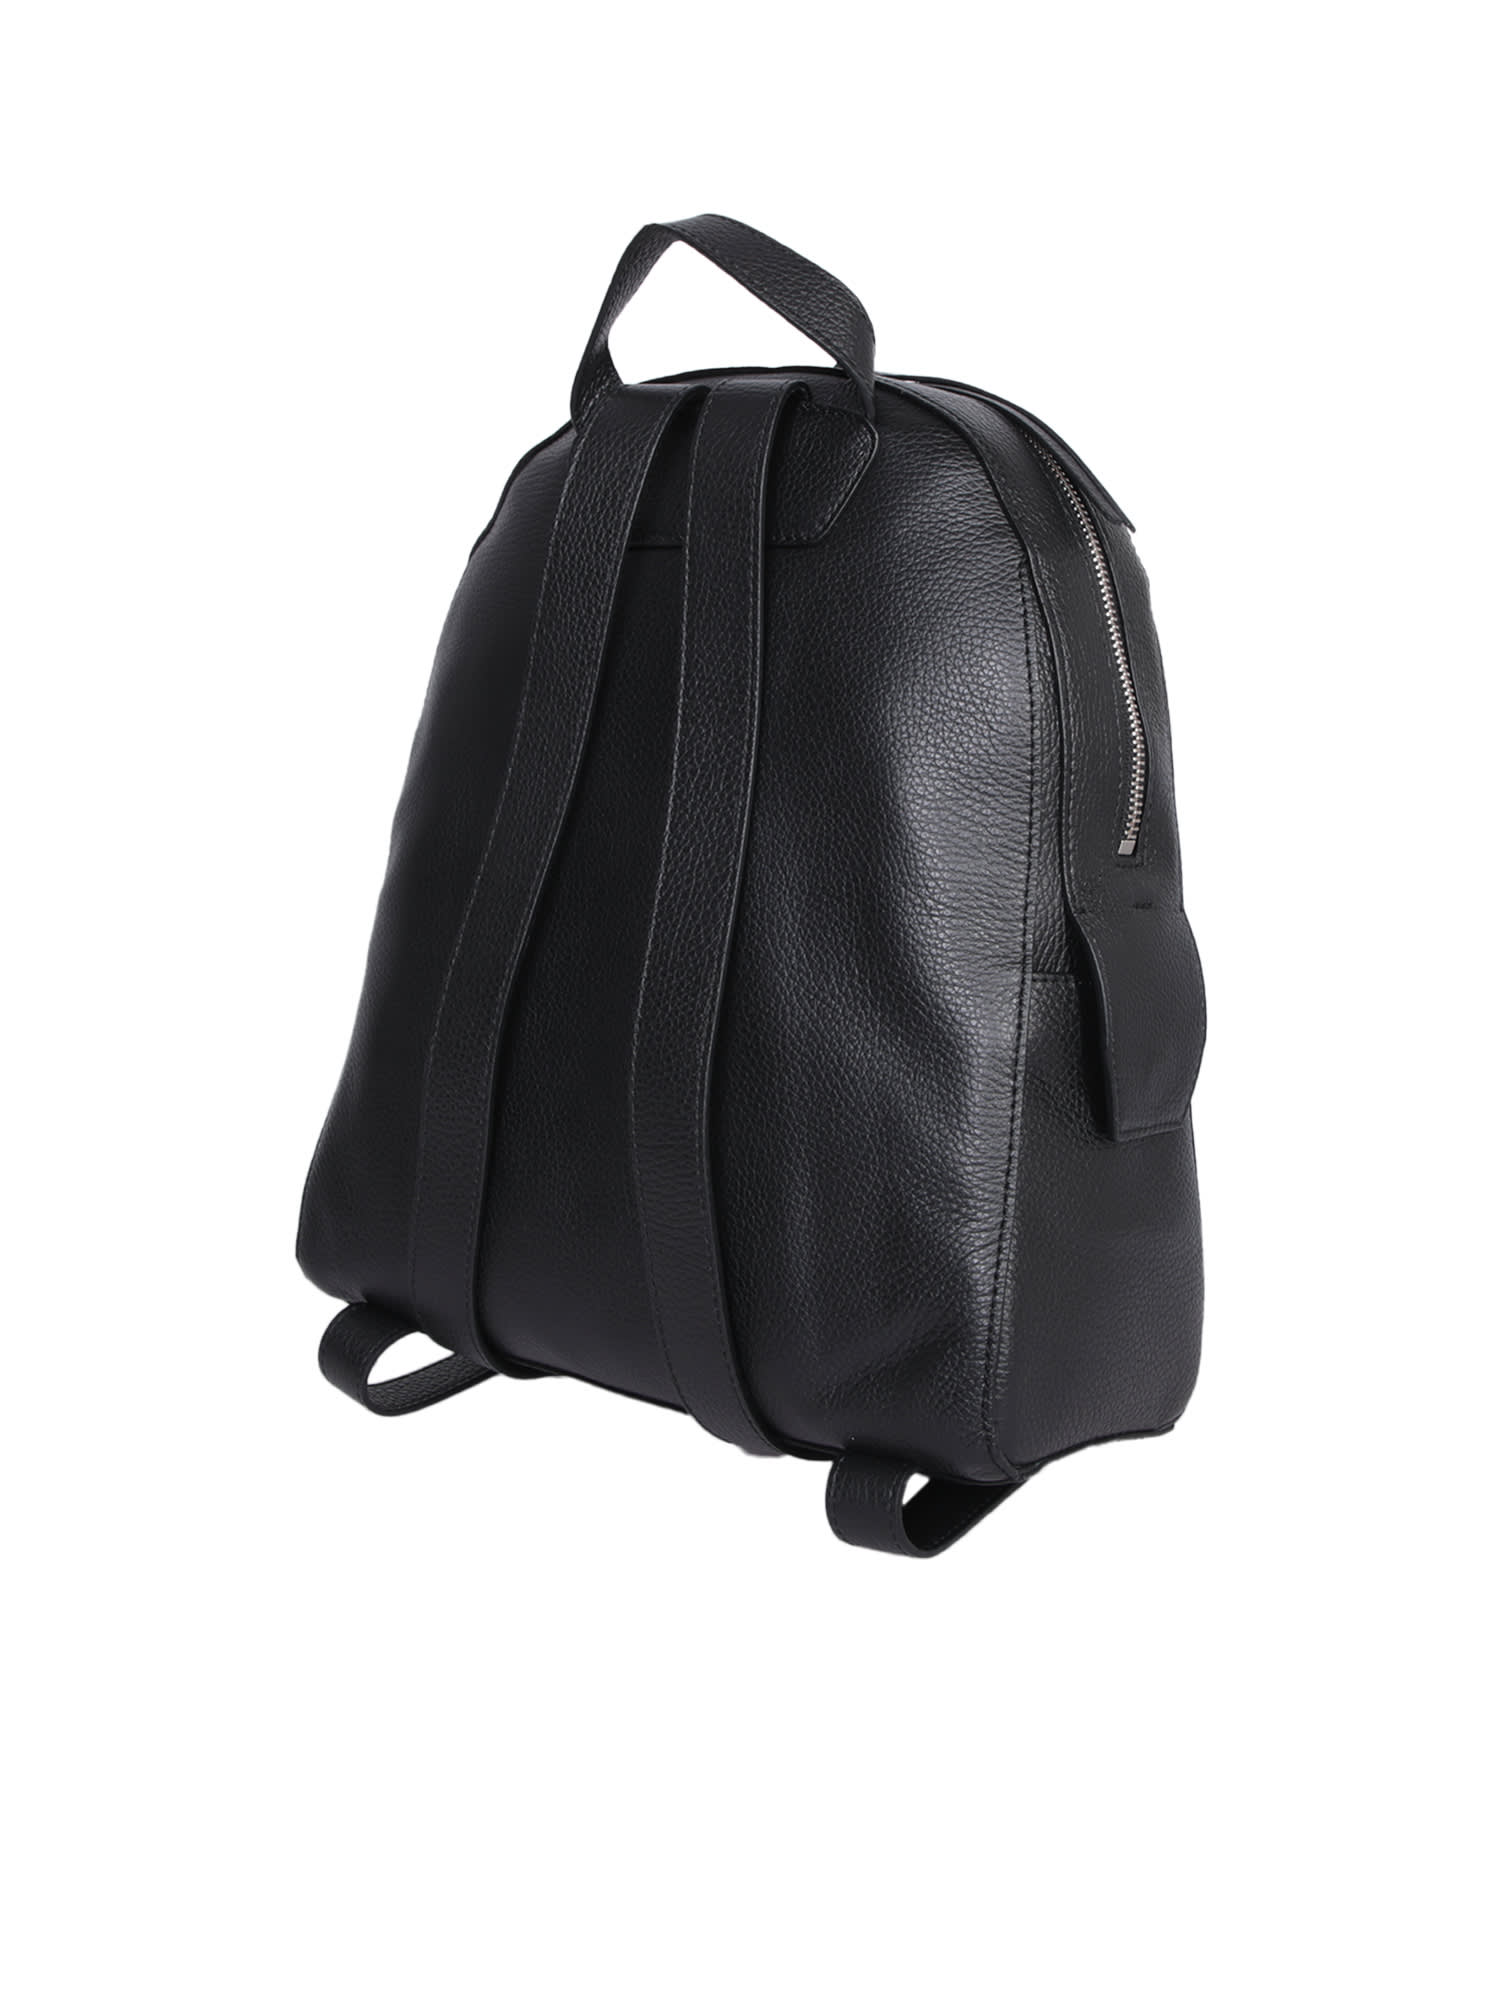 Shop Orciani Posh Soft Black Packpack